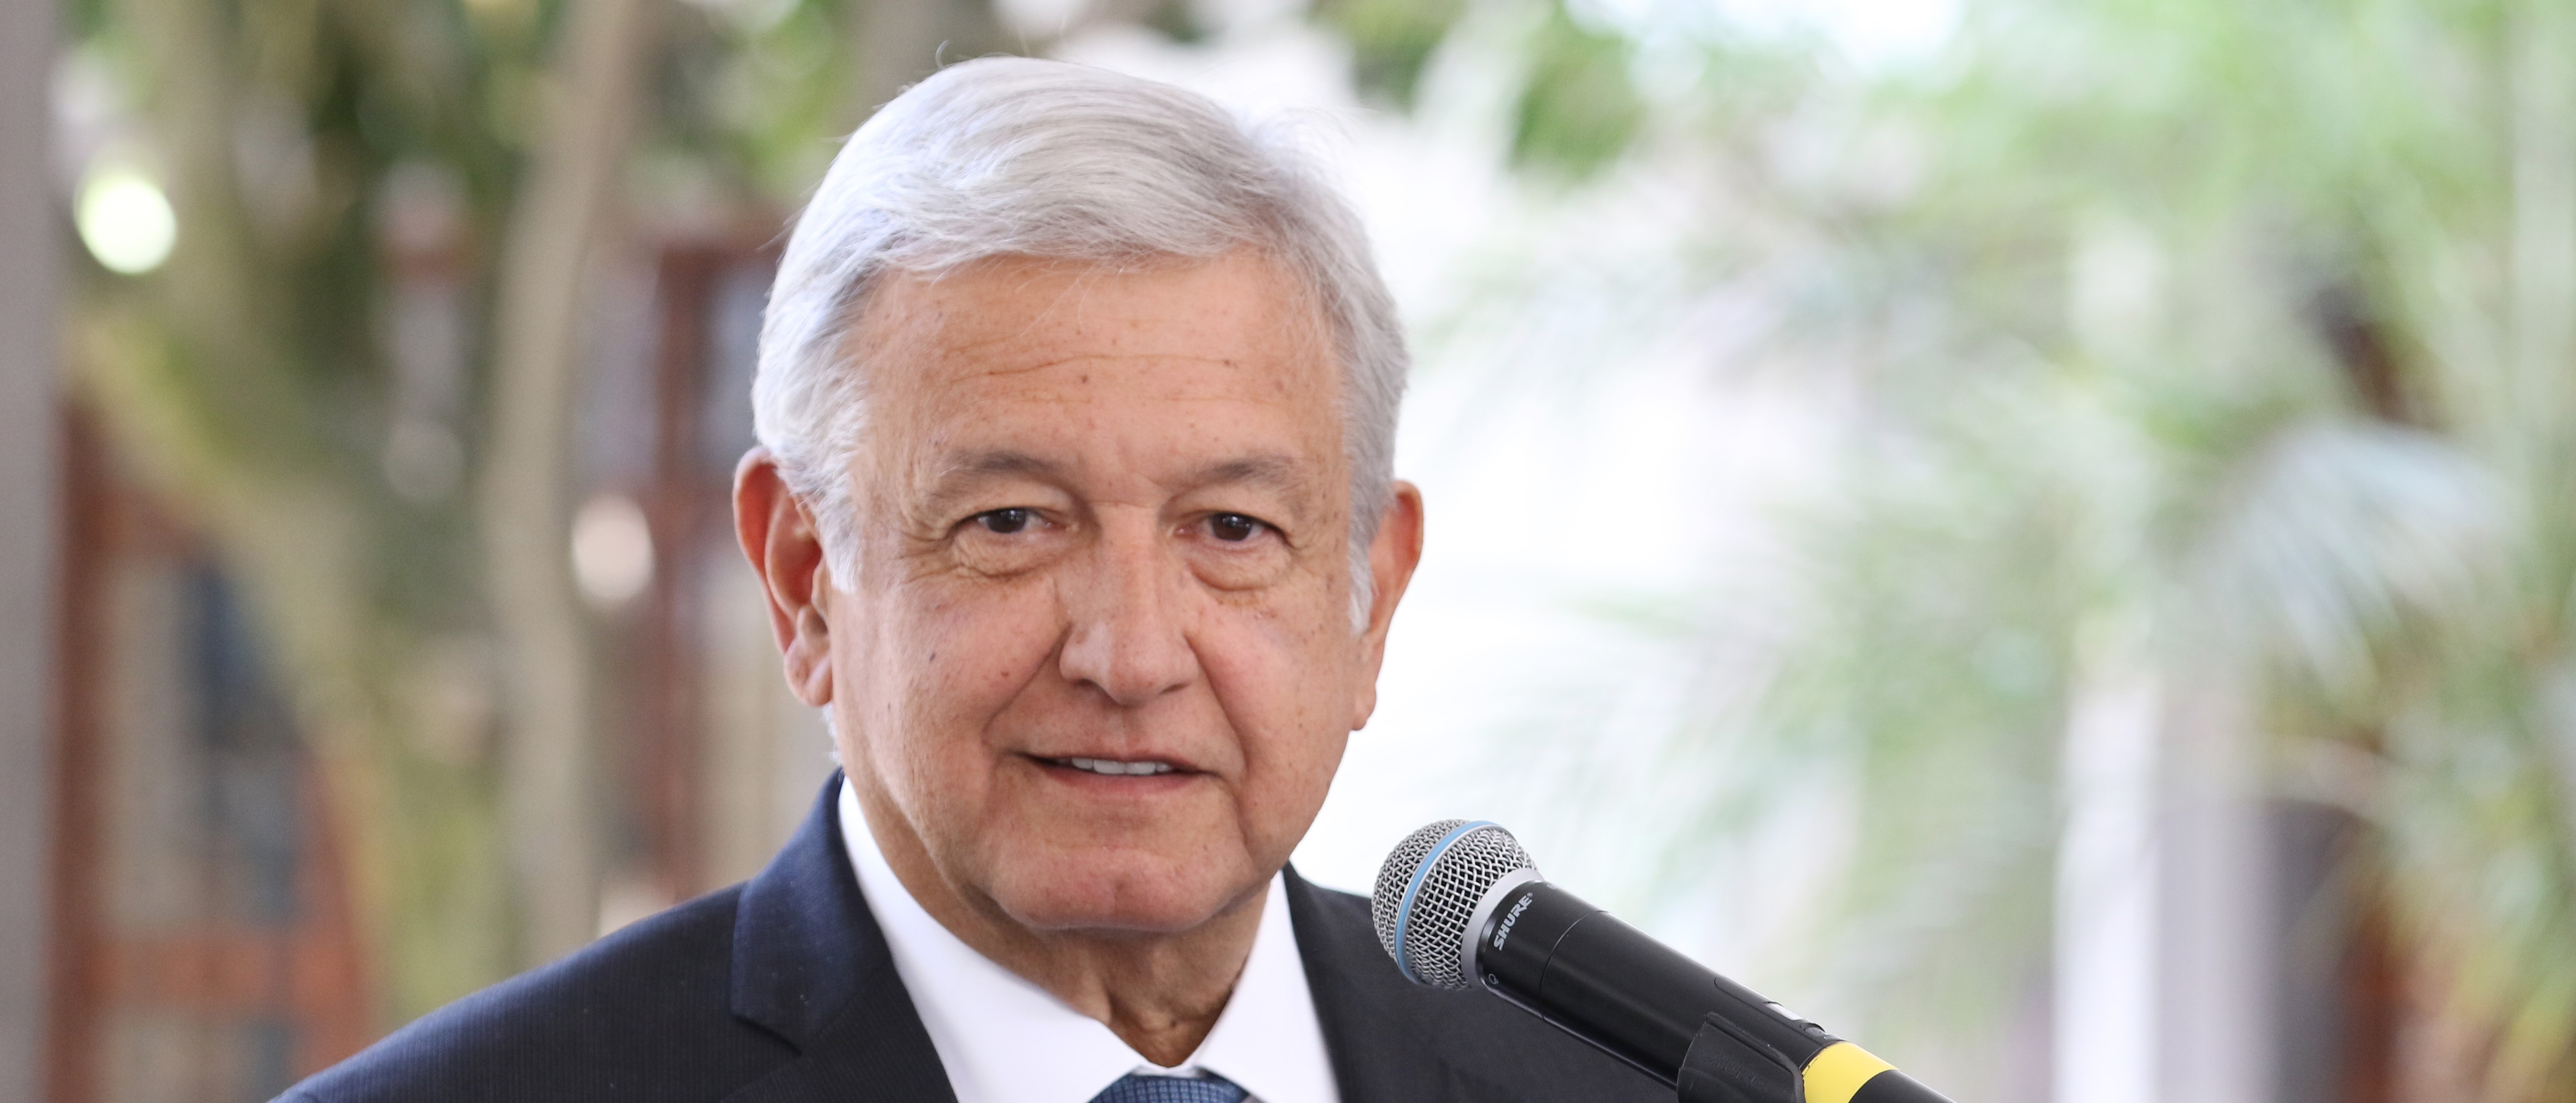 Mexico president survives recall referendum